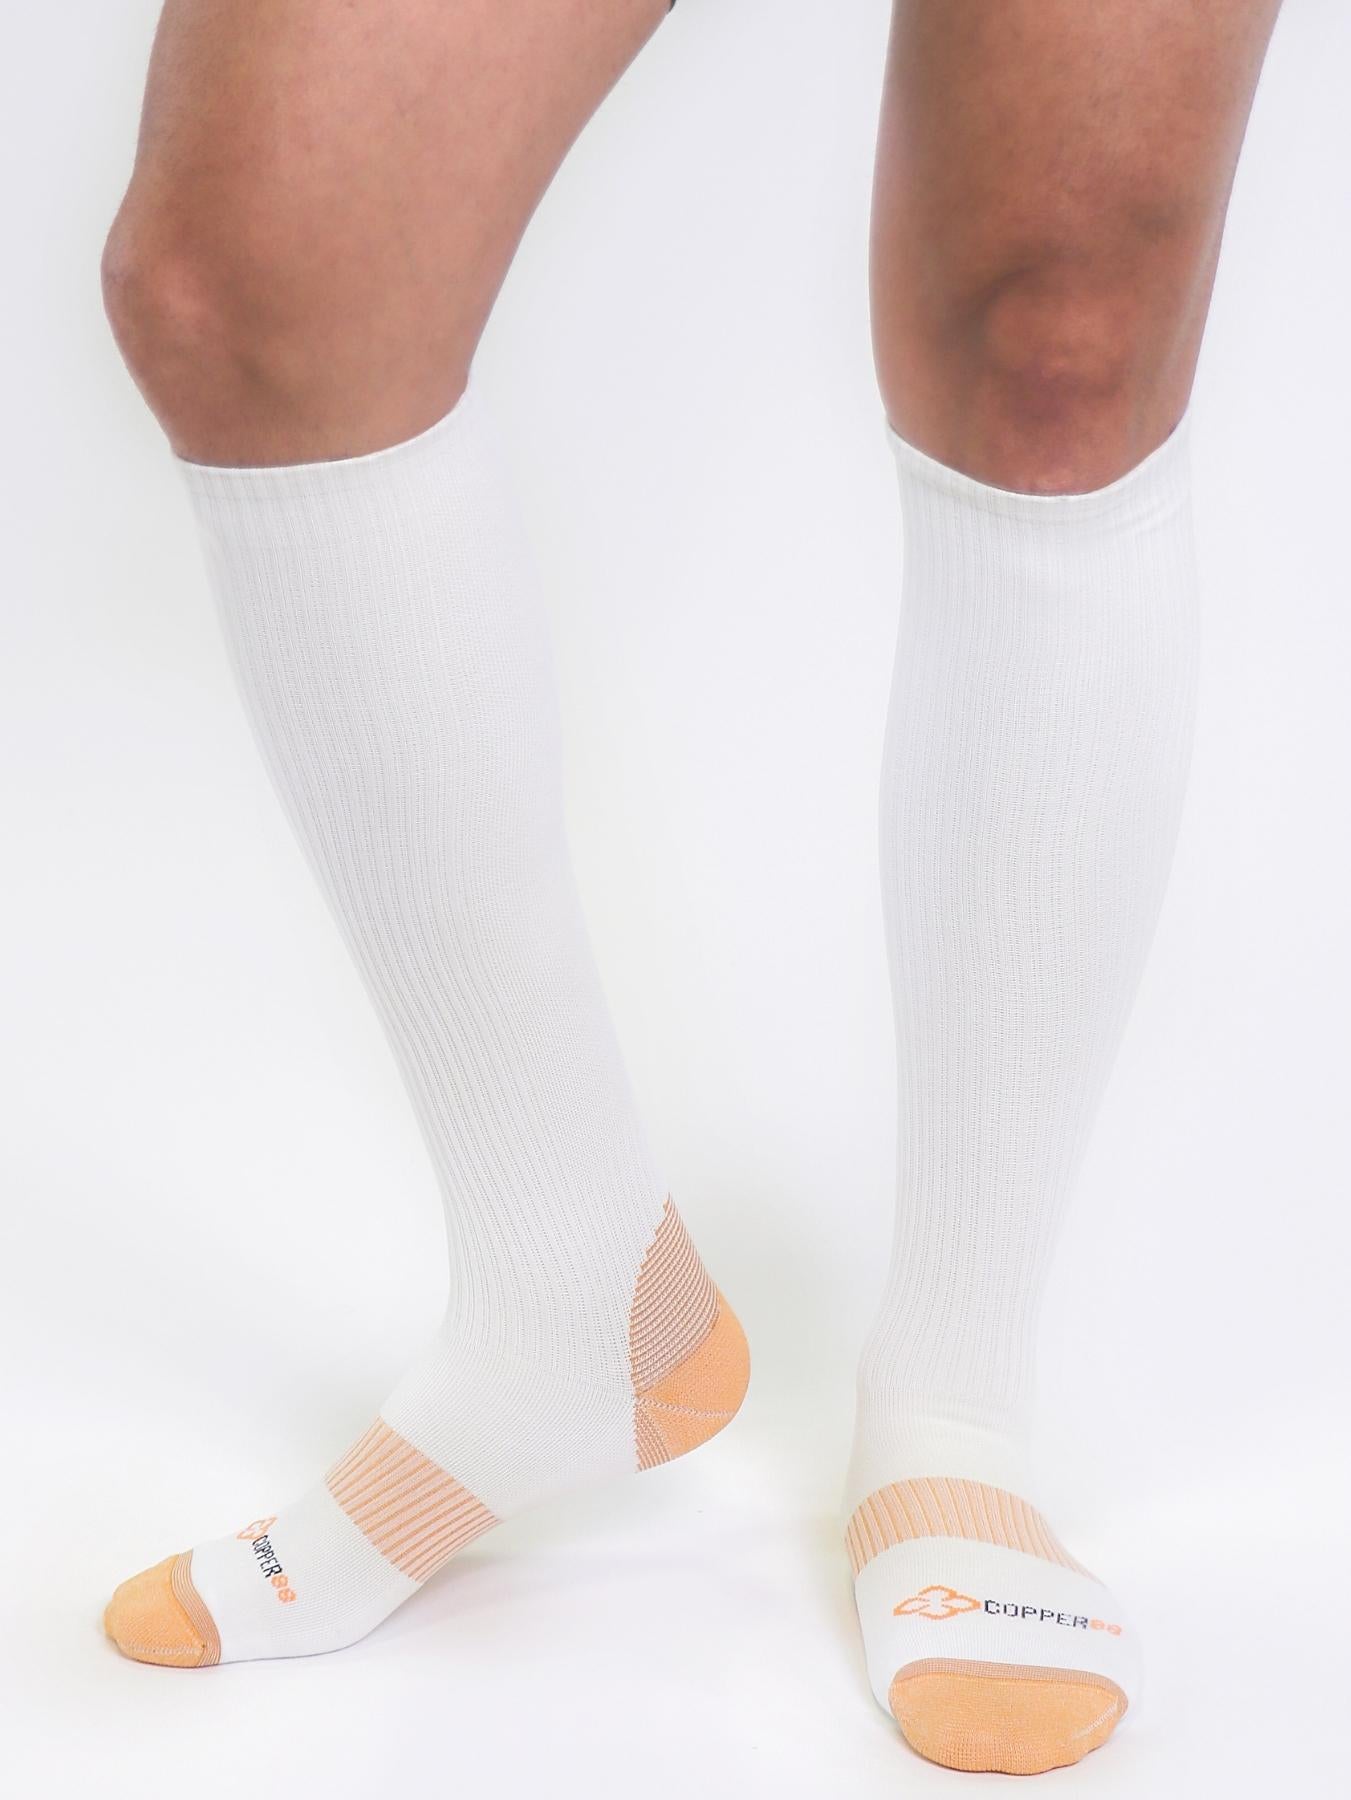 Copper Compression Knee Socks (White) - Mens